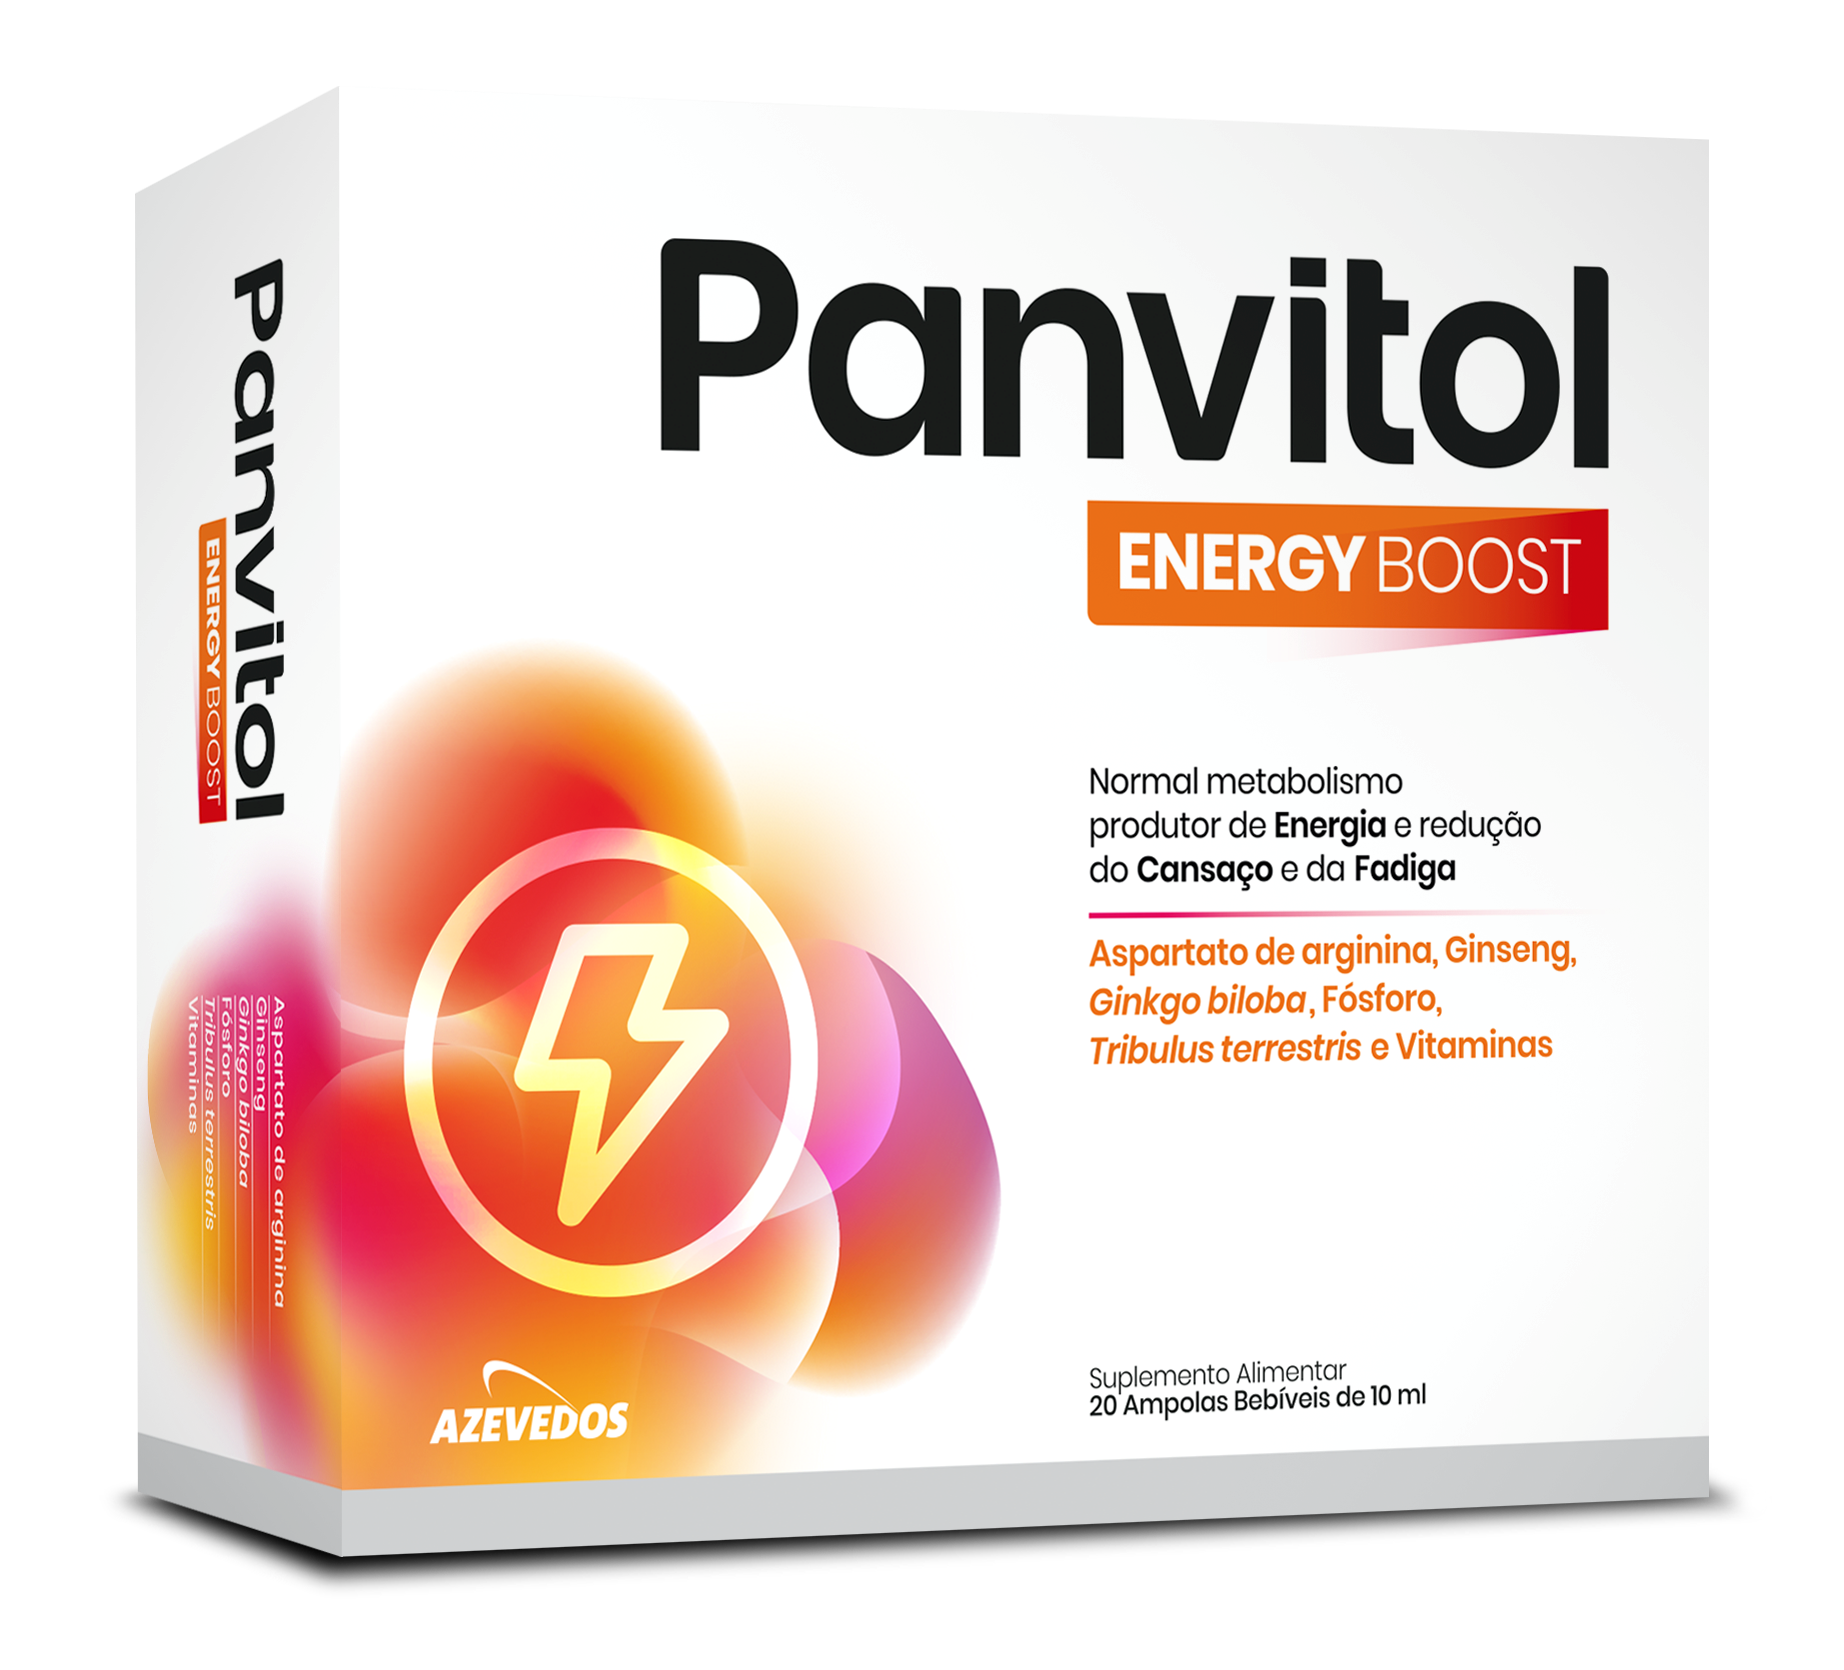 Panvitol Energy Boost